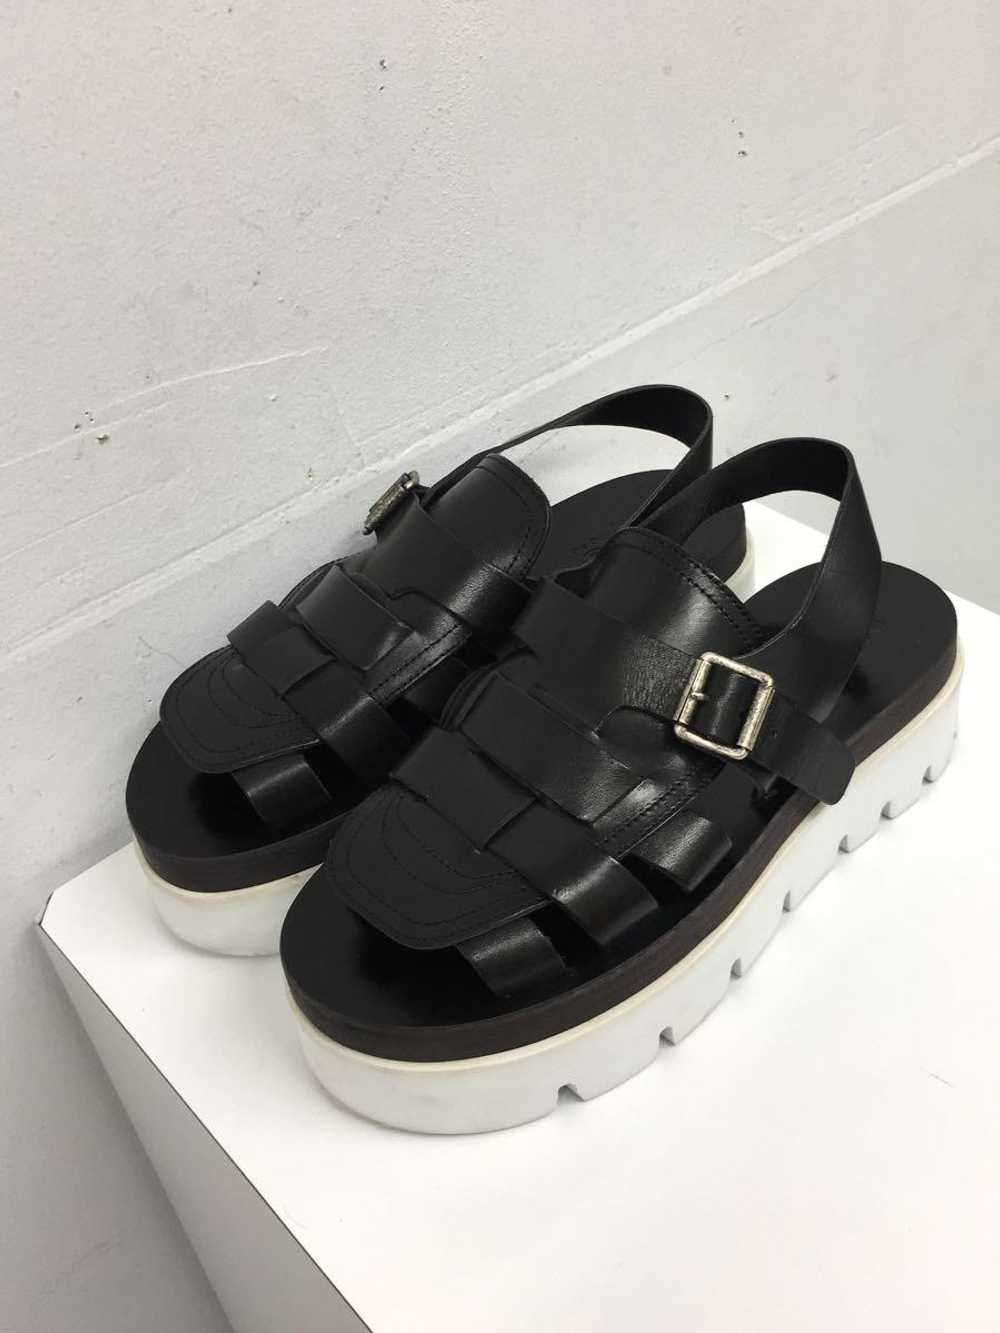 Mm6 Flat Sandals/Sandals/37/Black/Leather Shoes B… - image 2